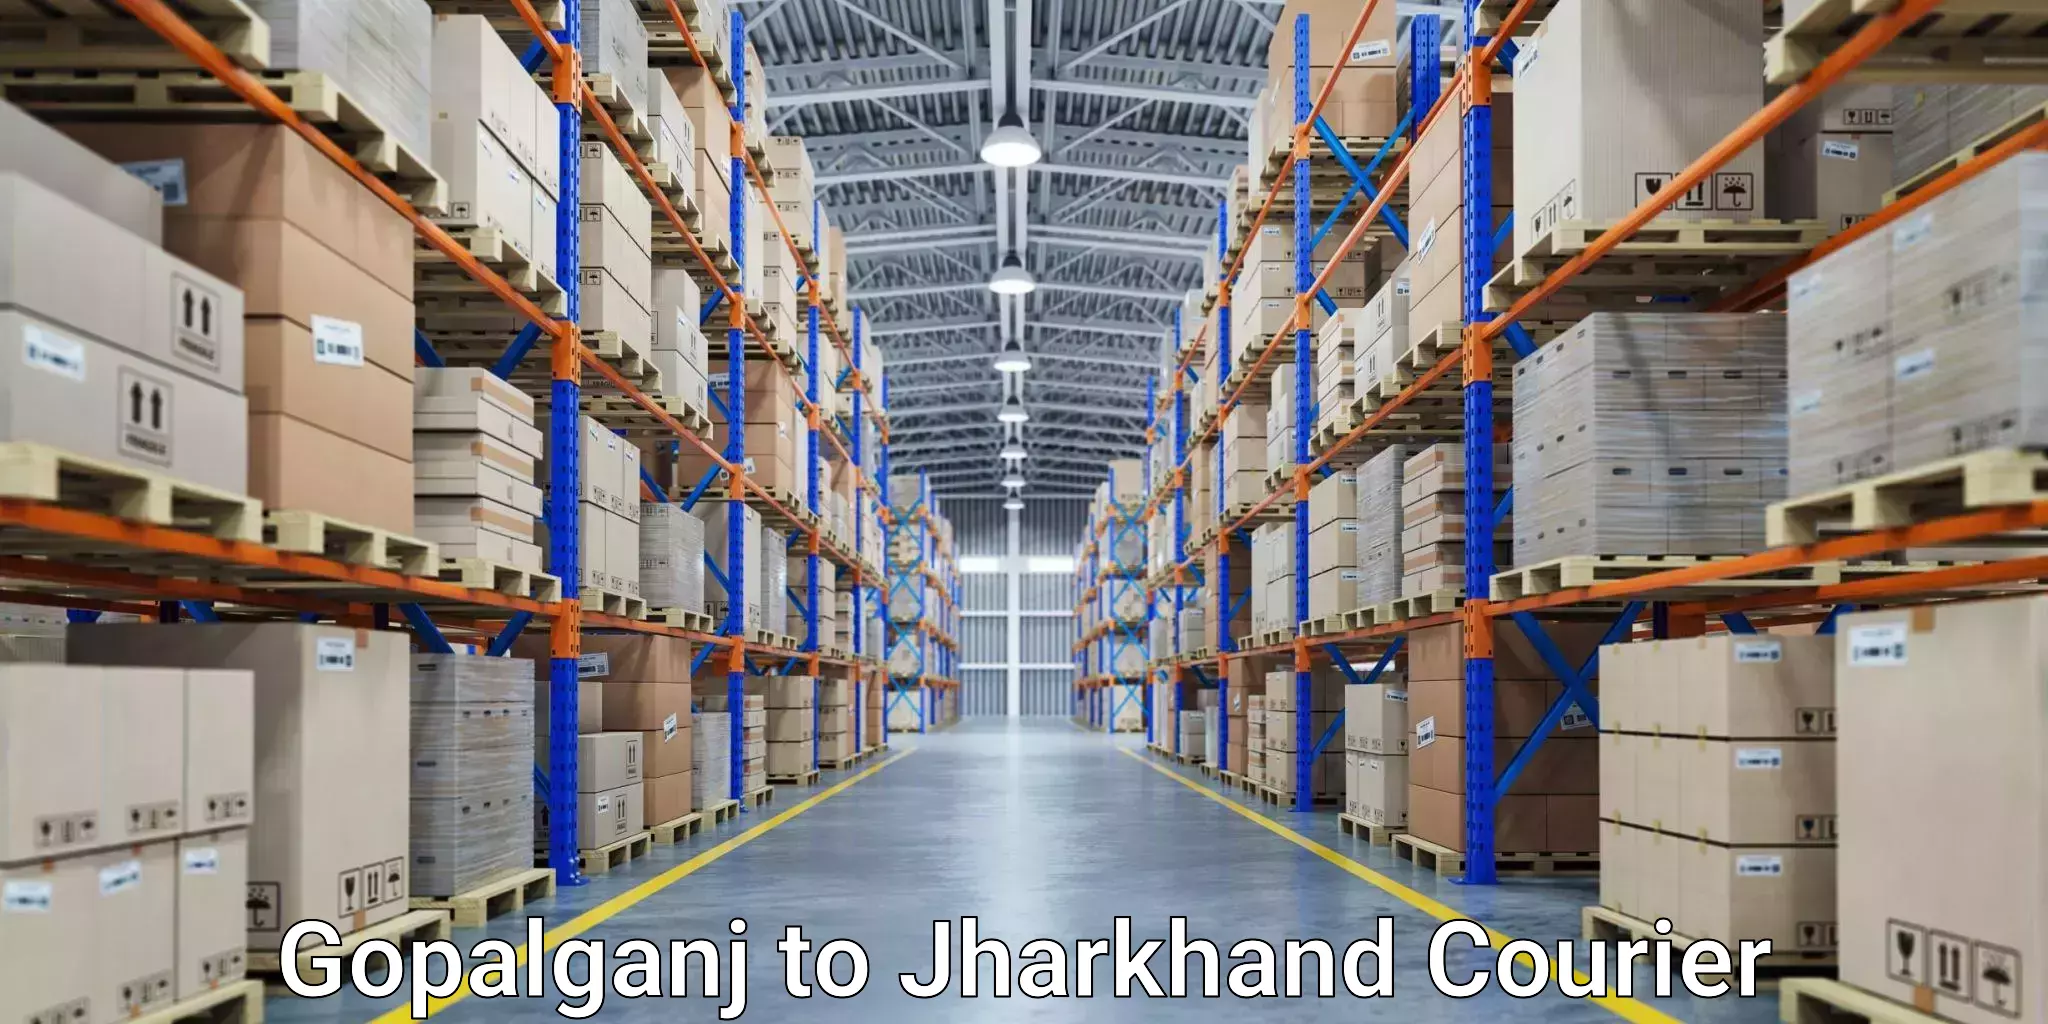 Global logistics network Gopalganj to Jamshedpur